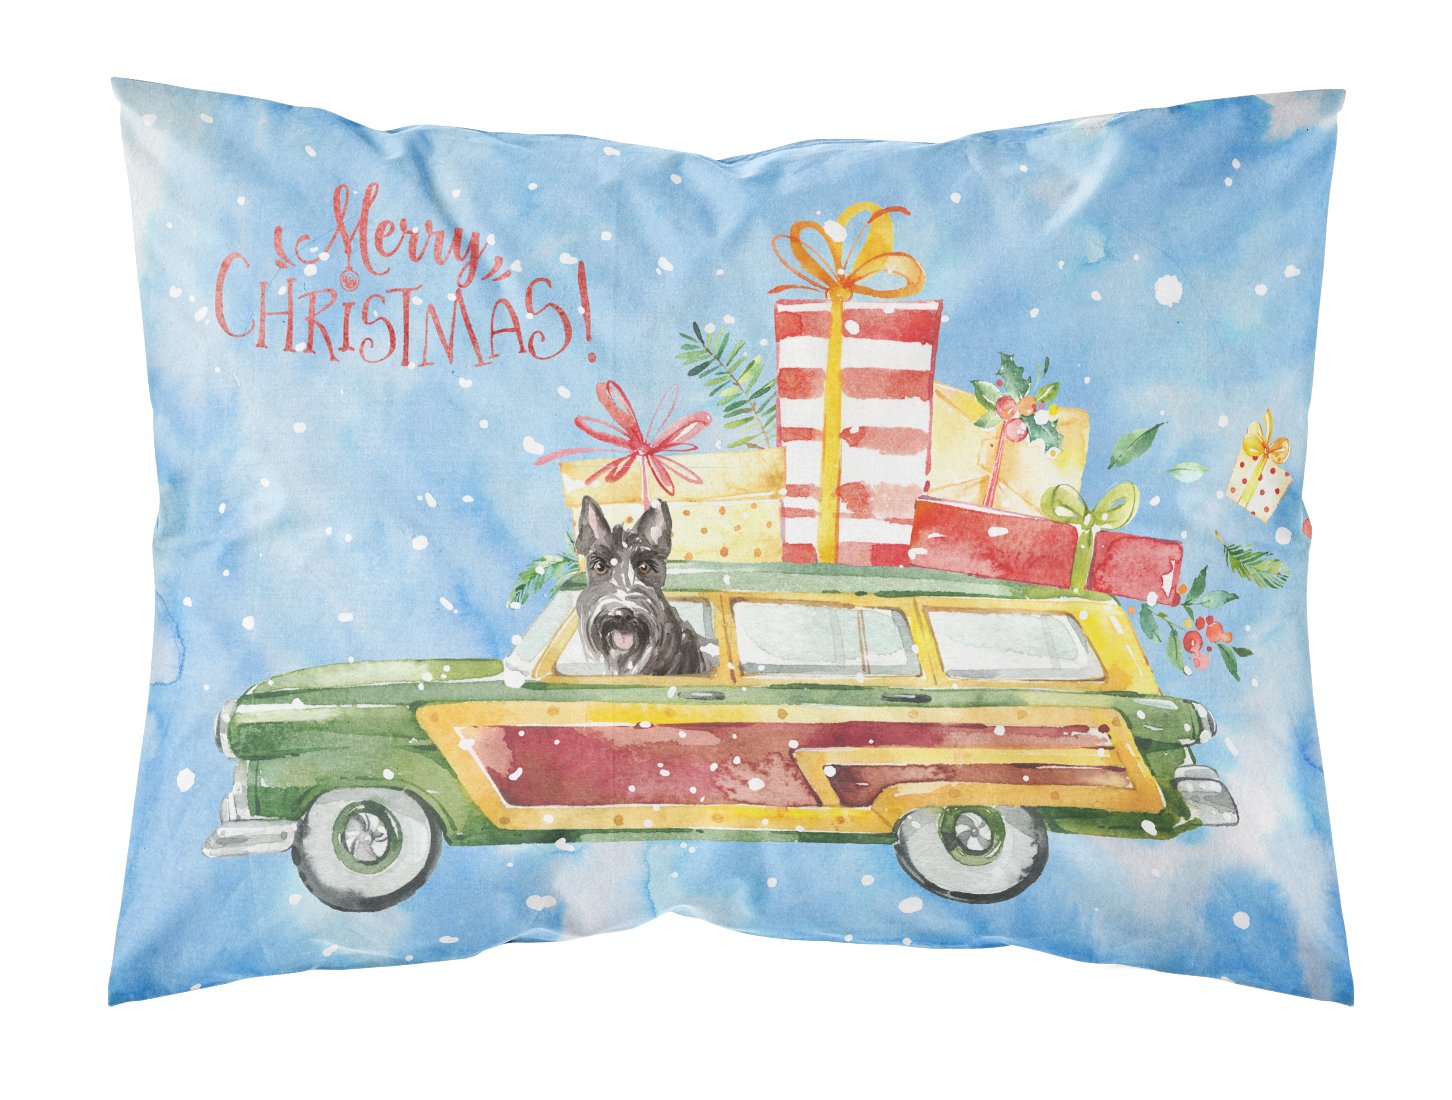 Merry Christmas Scottish Terrier Fabric Standard Pillowcase CK2420PILLOWCASE by Caroline's Treasures